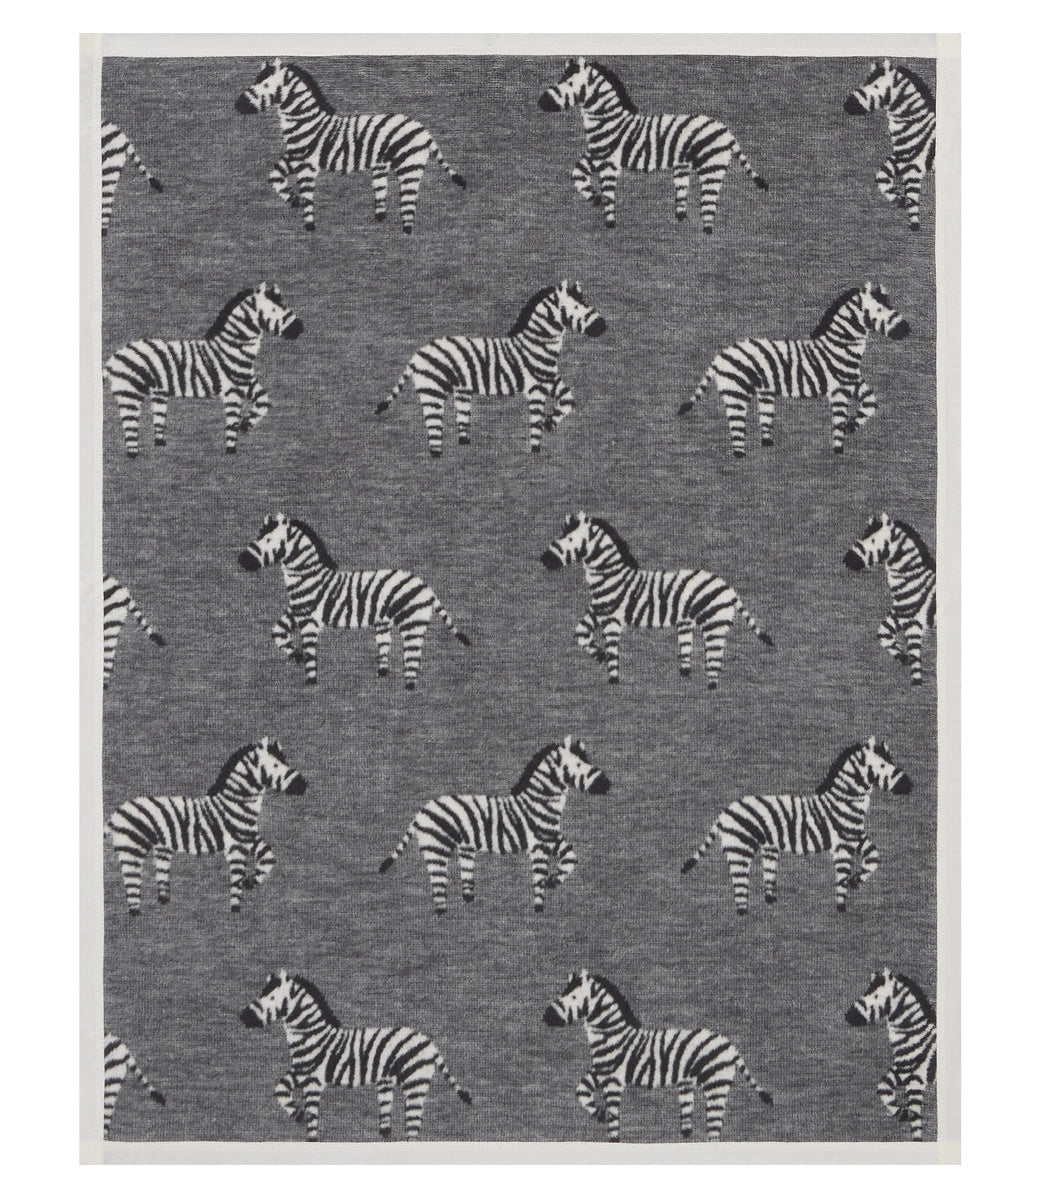 ChappyWrap Zebra Zeal Mini Blanket